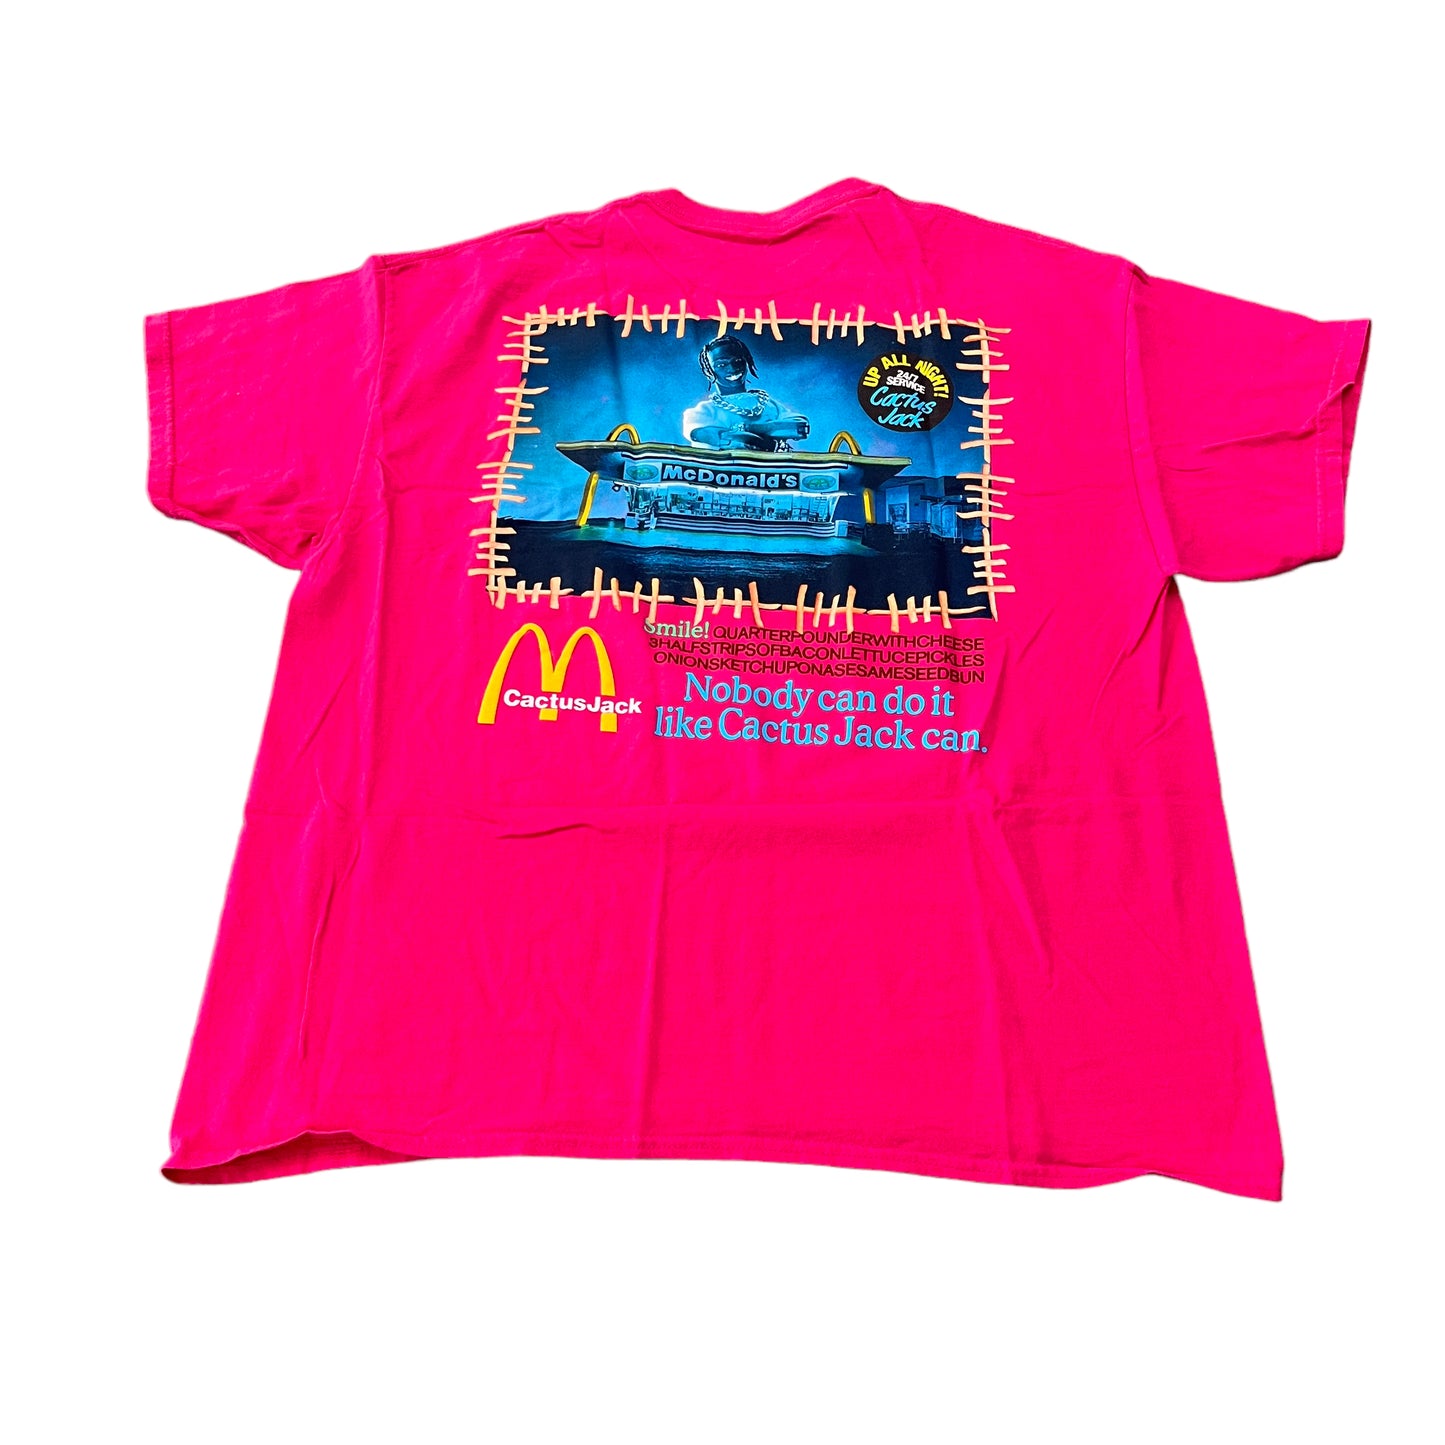 Travis Scott x McDonald’s Pink Tee